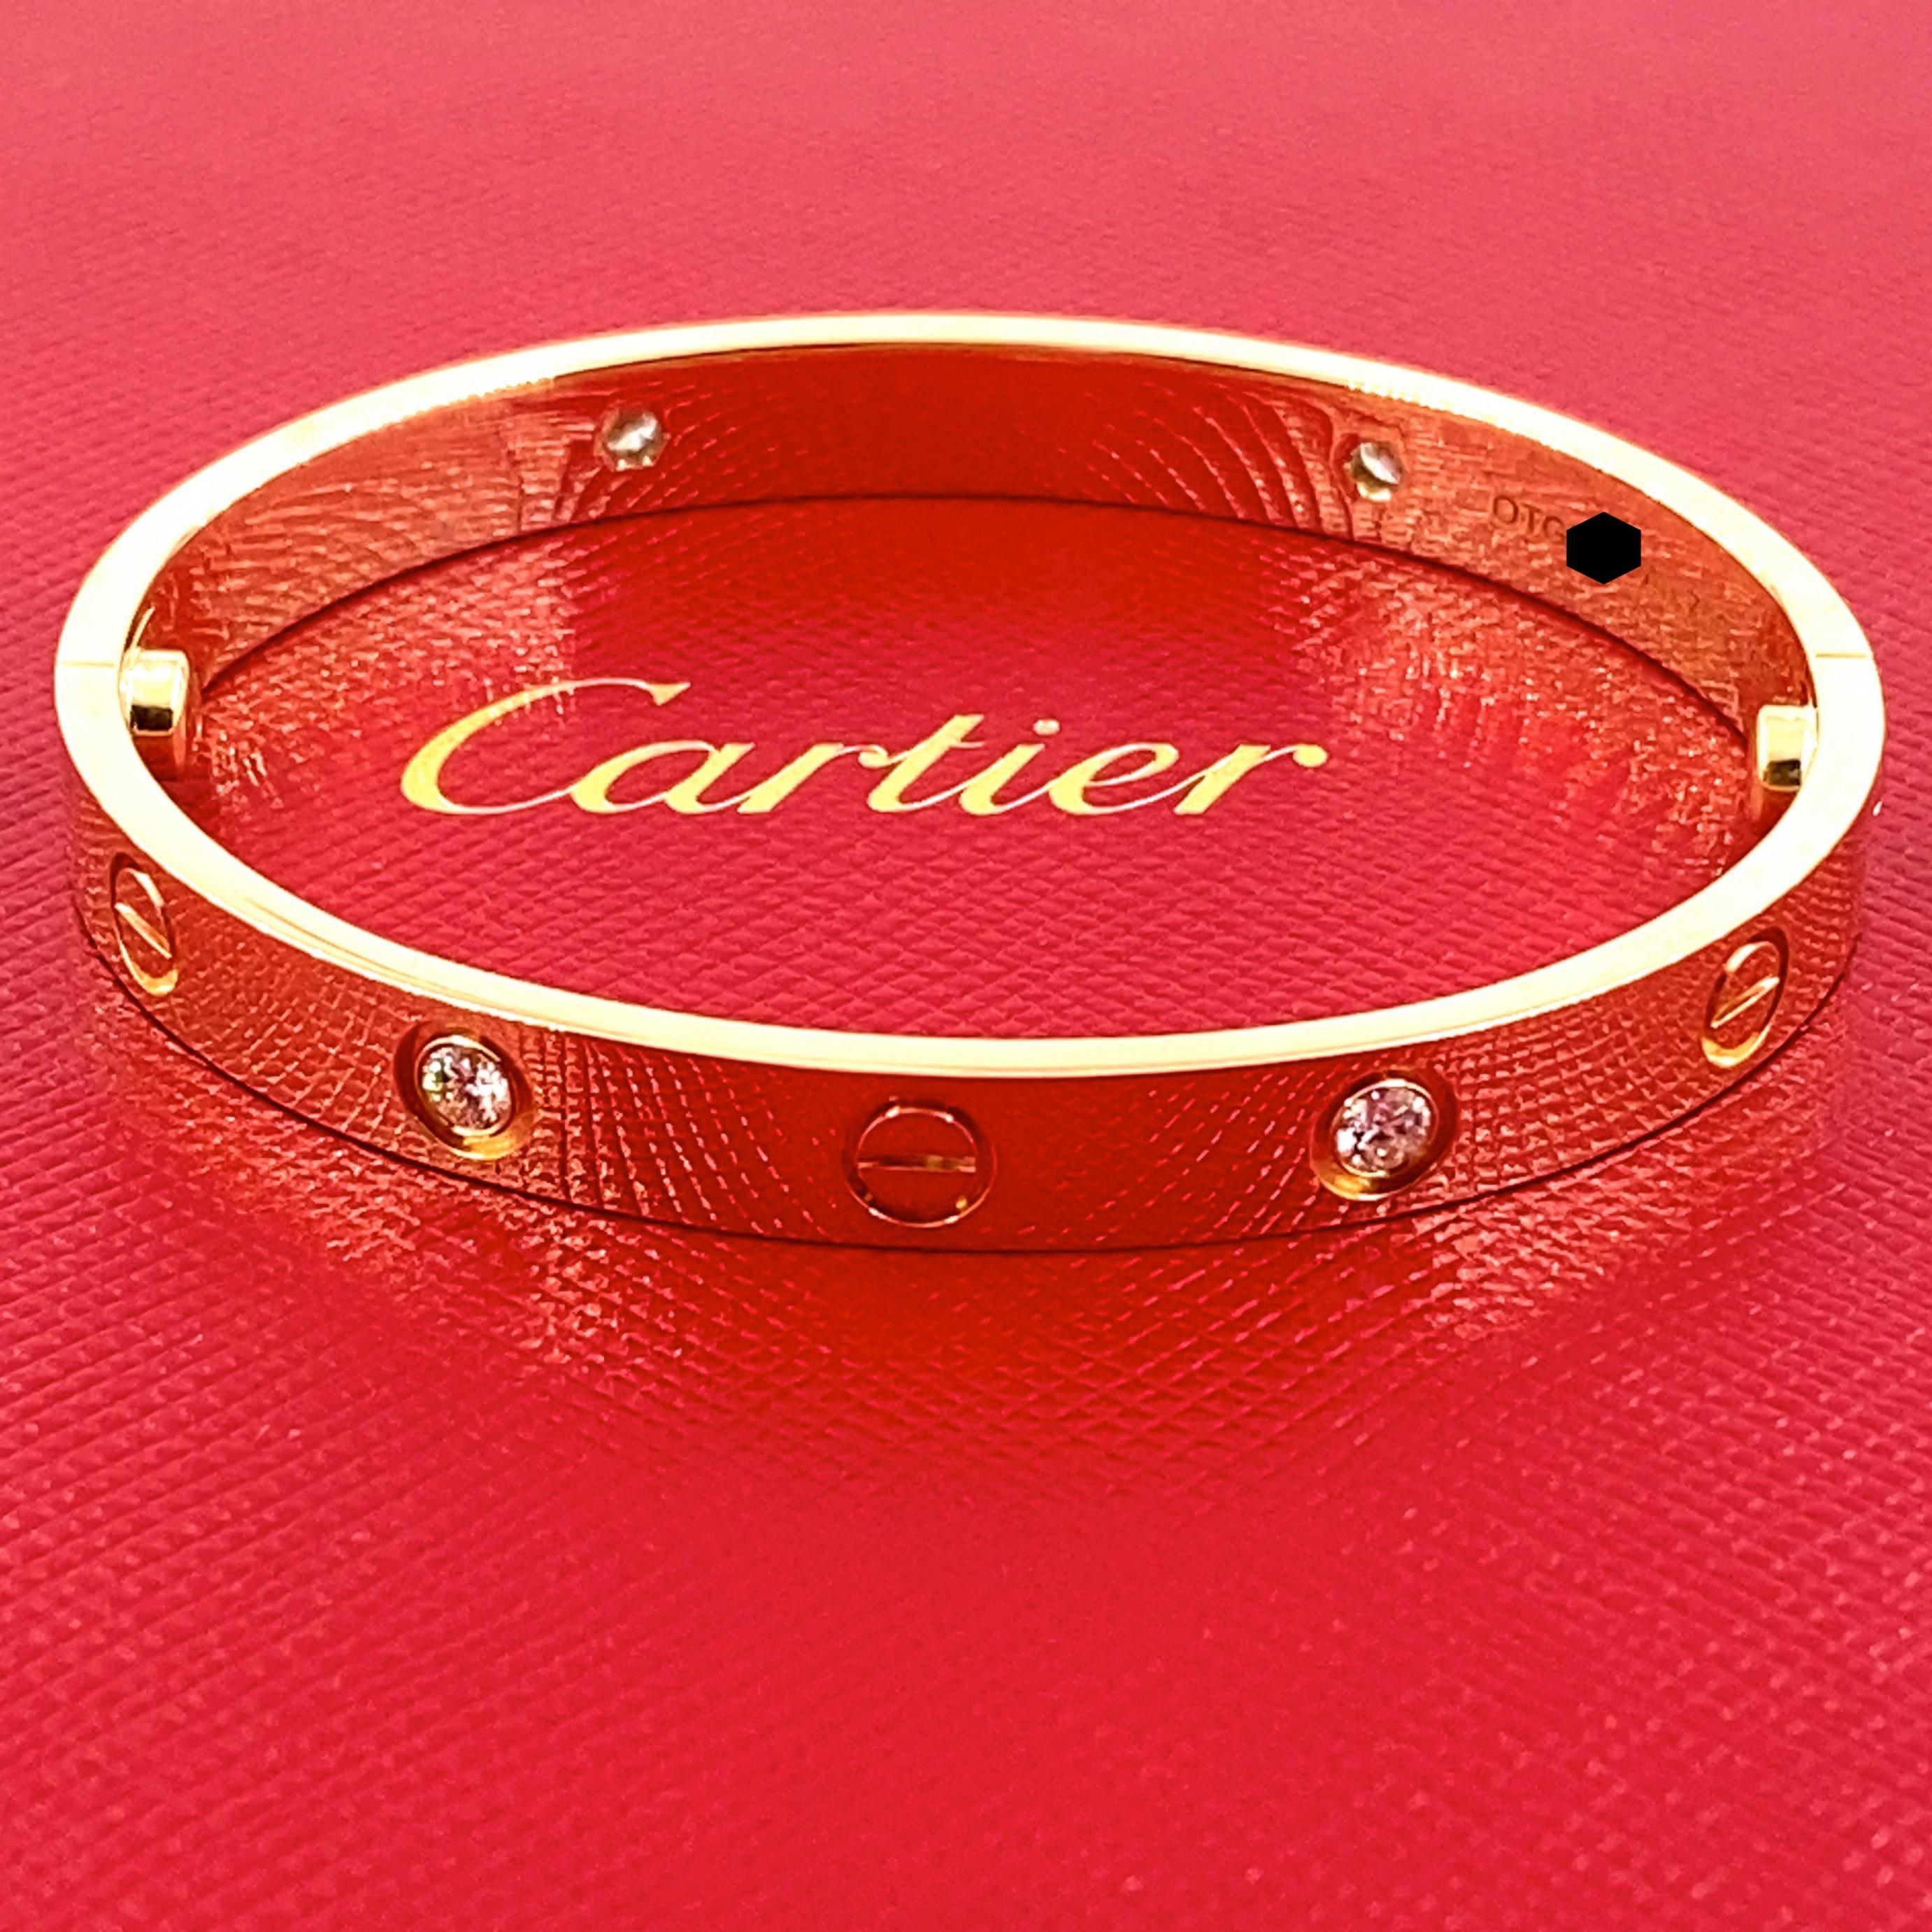 Cartier 4 Diamond Love Bangle Bracelet with Box 18kt Yellow Gold SZ 16 For Sale 2